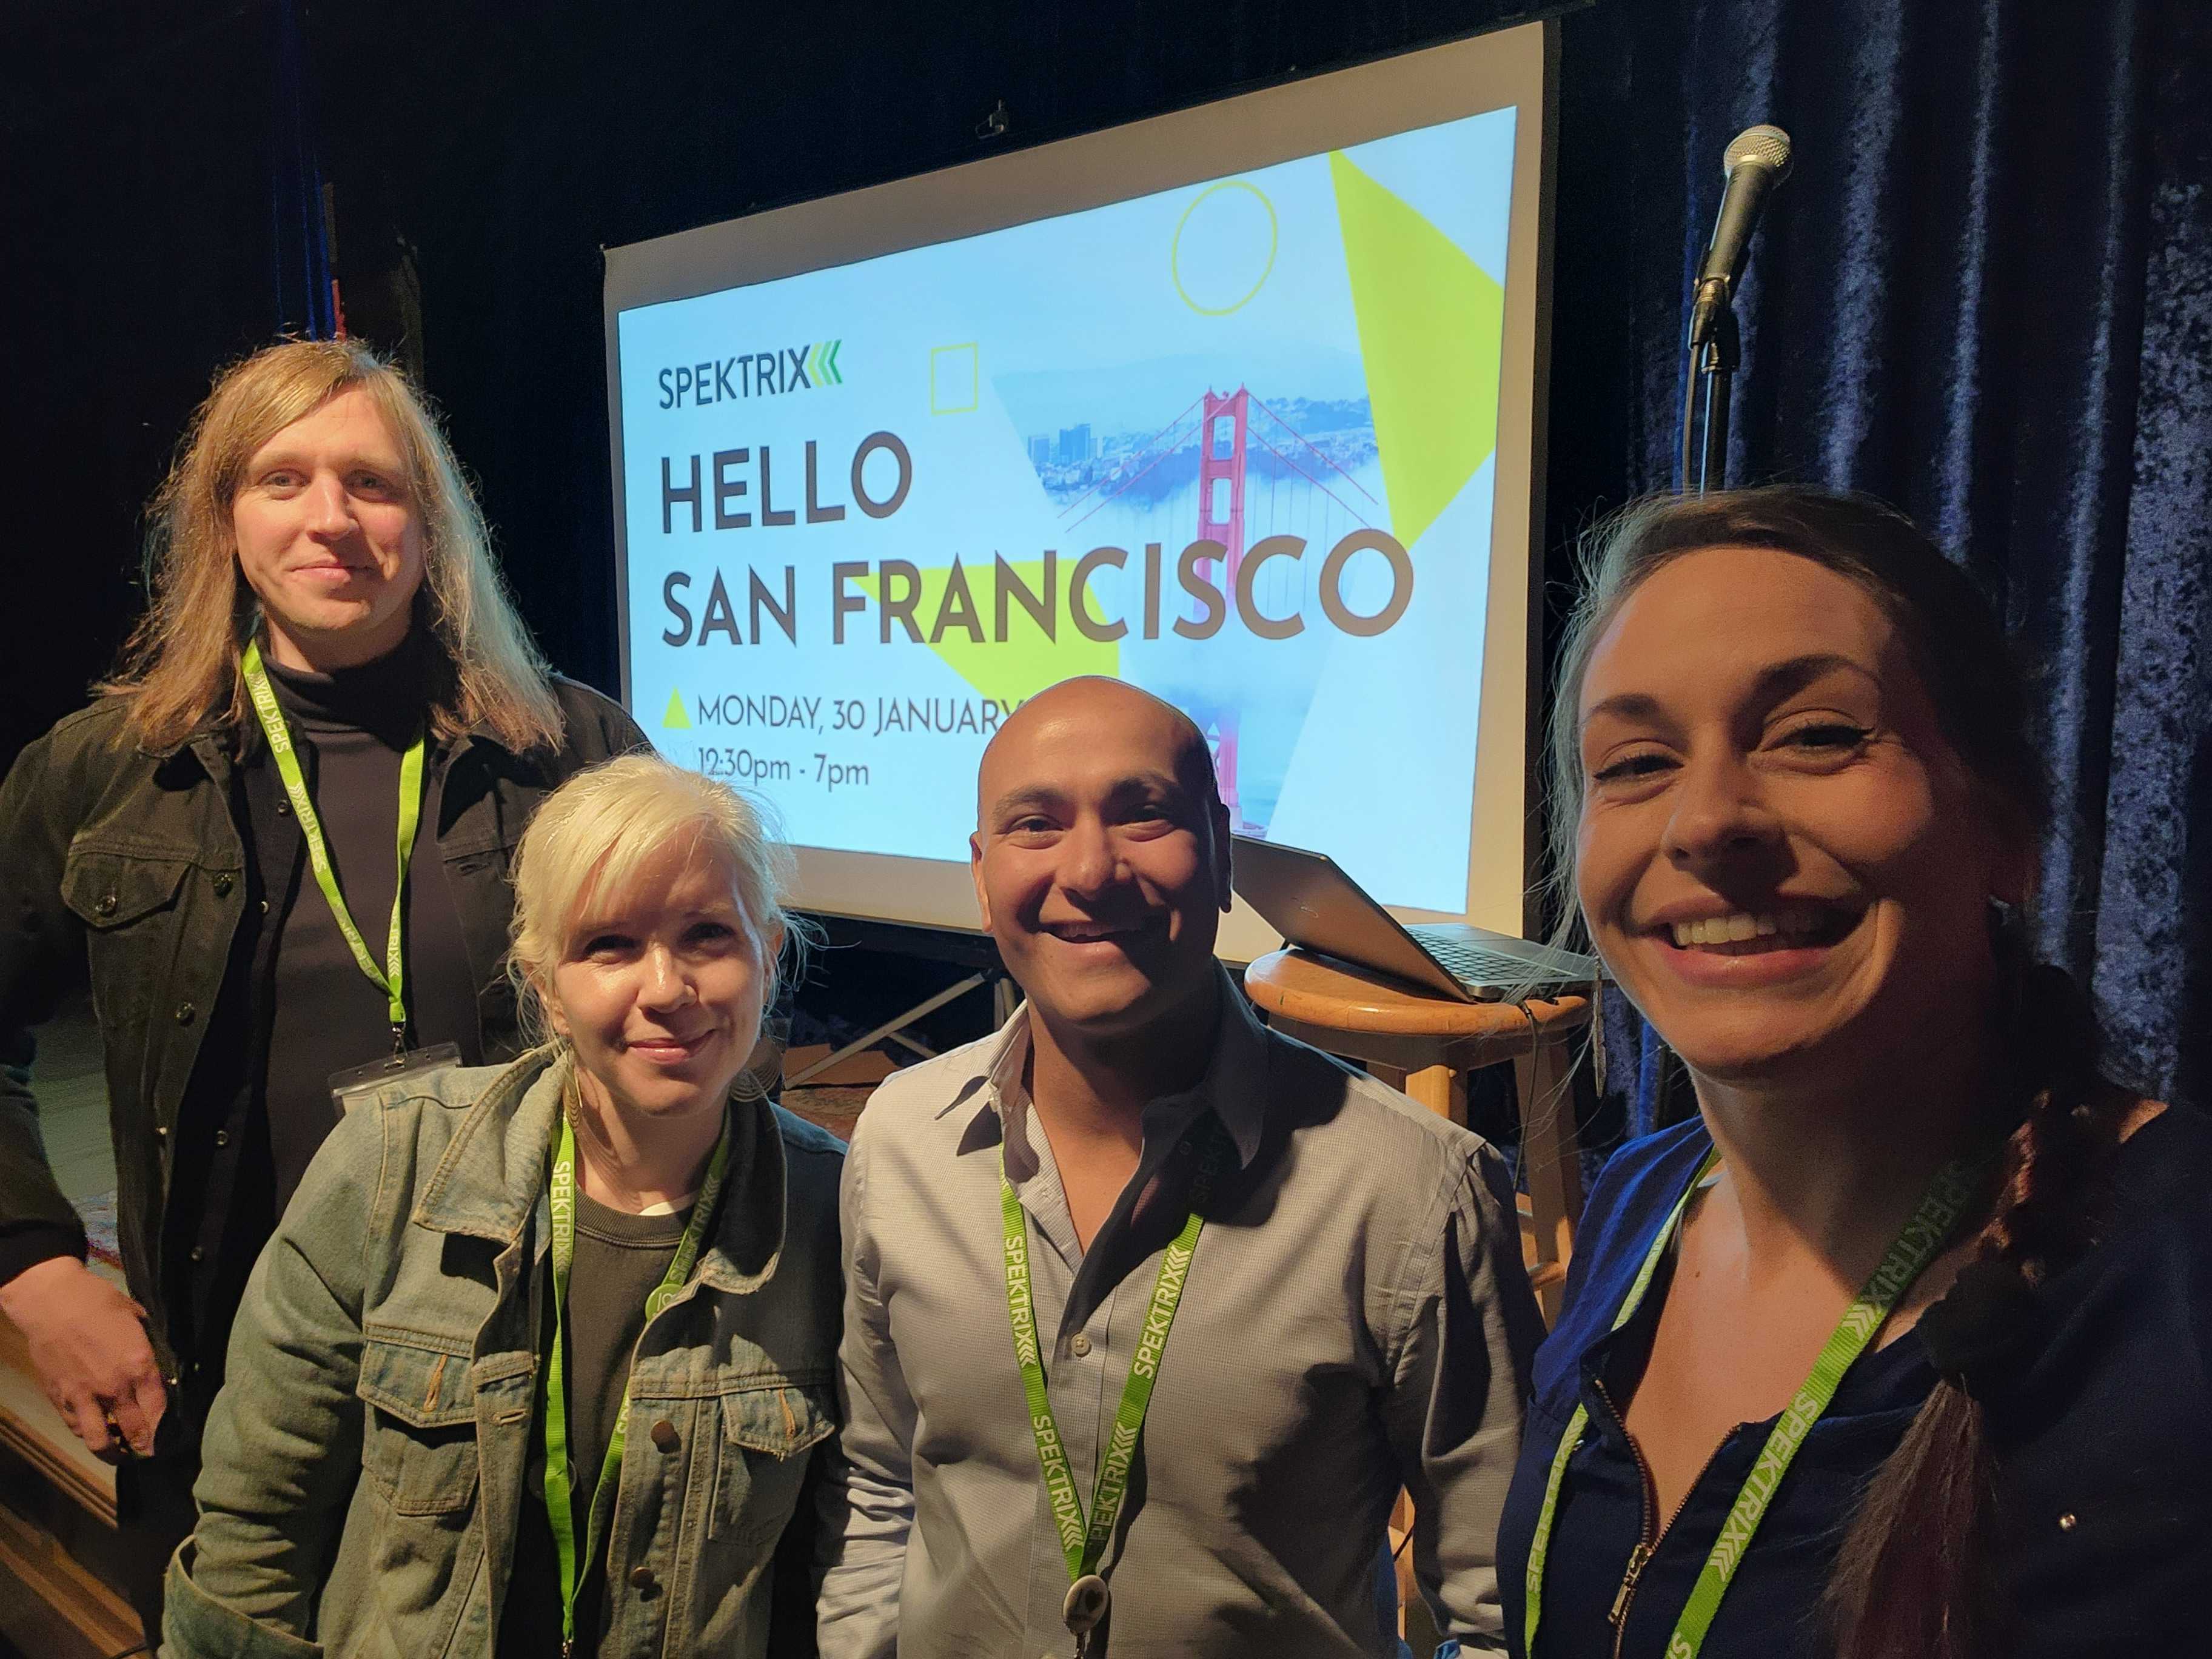 Spektrix team members smile and wear matching green lanyards at Hubs in San Francisco